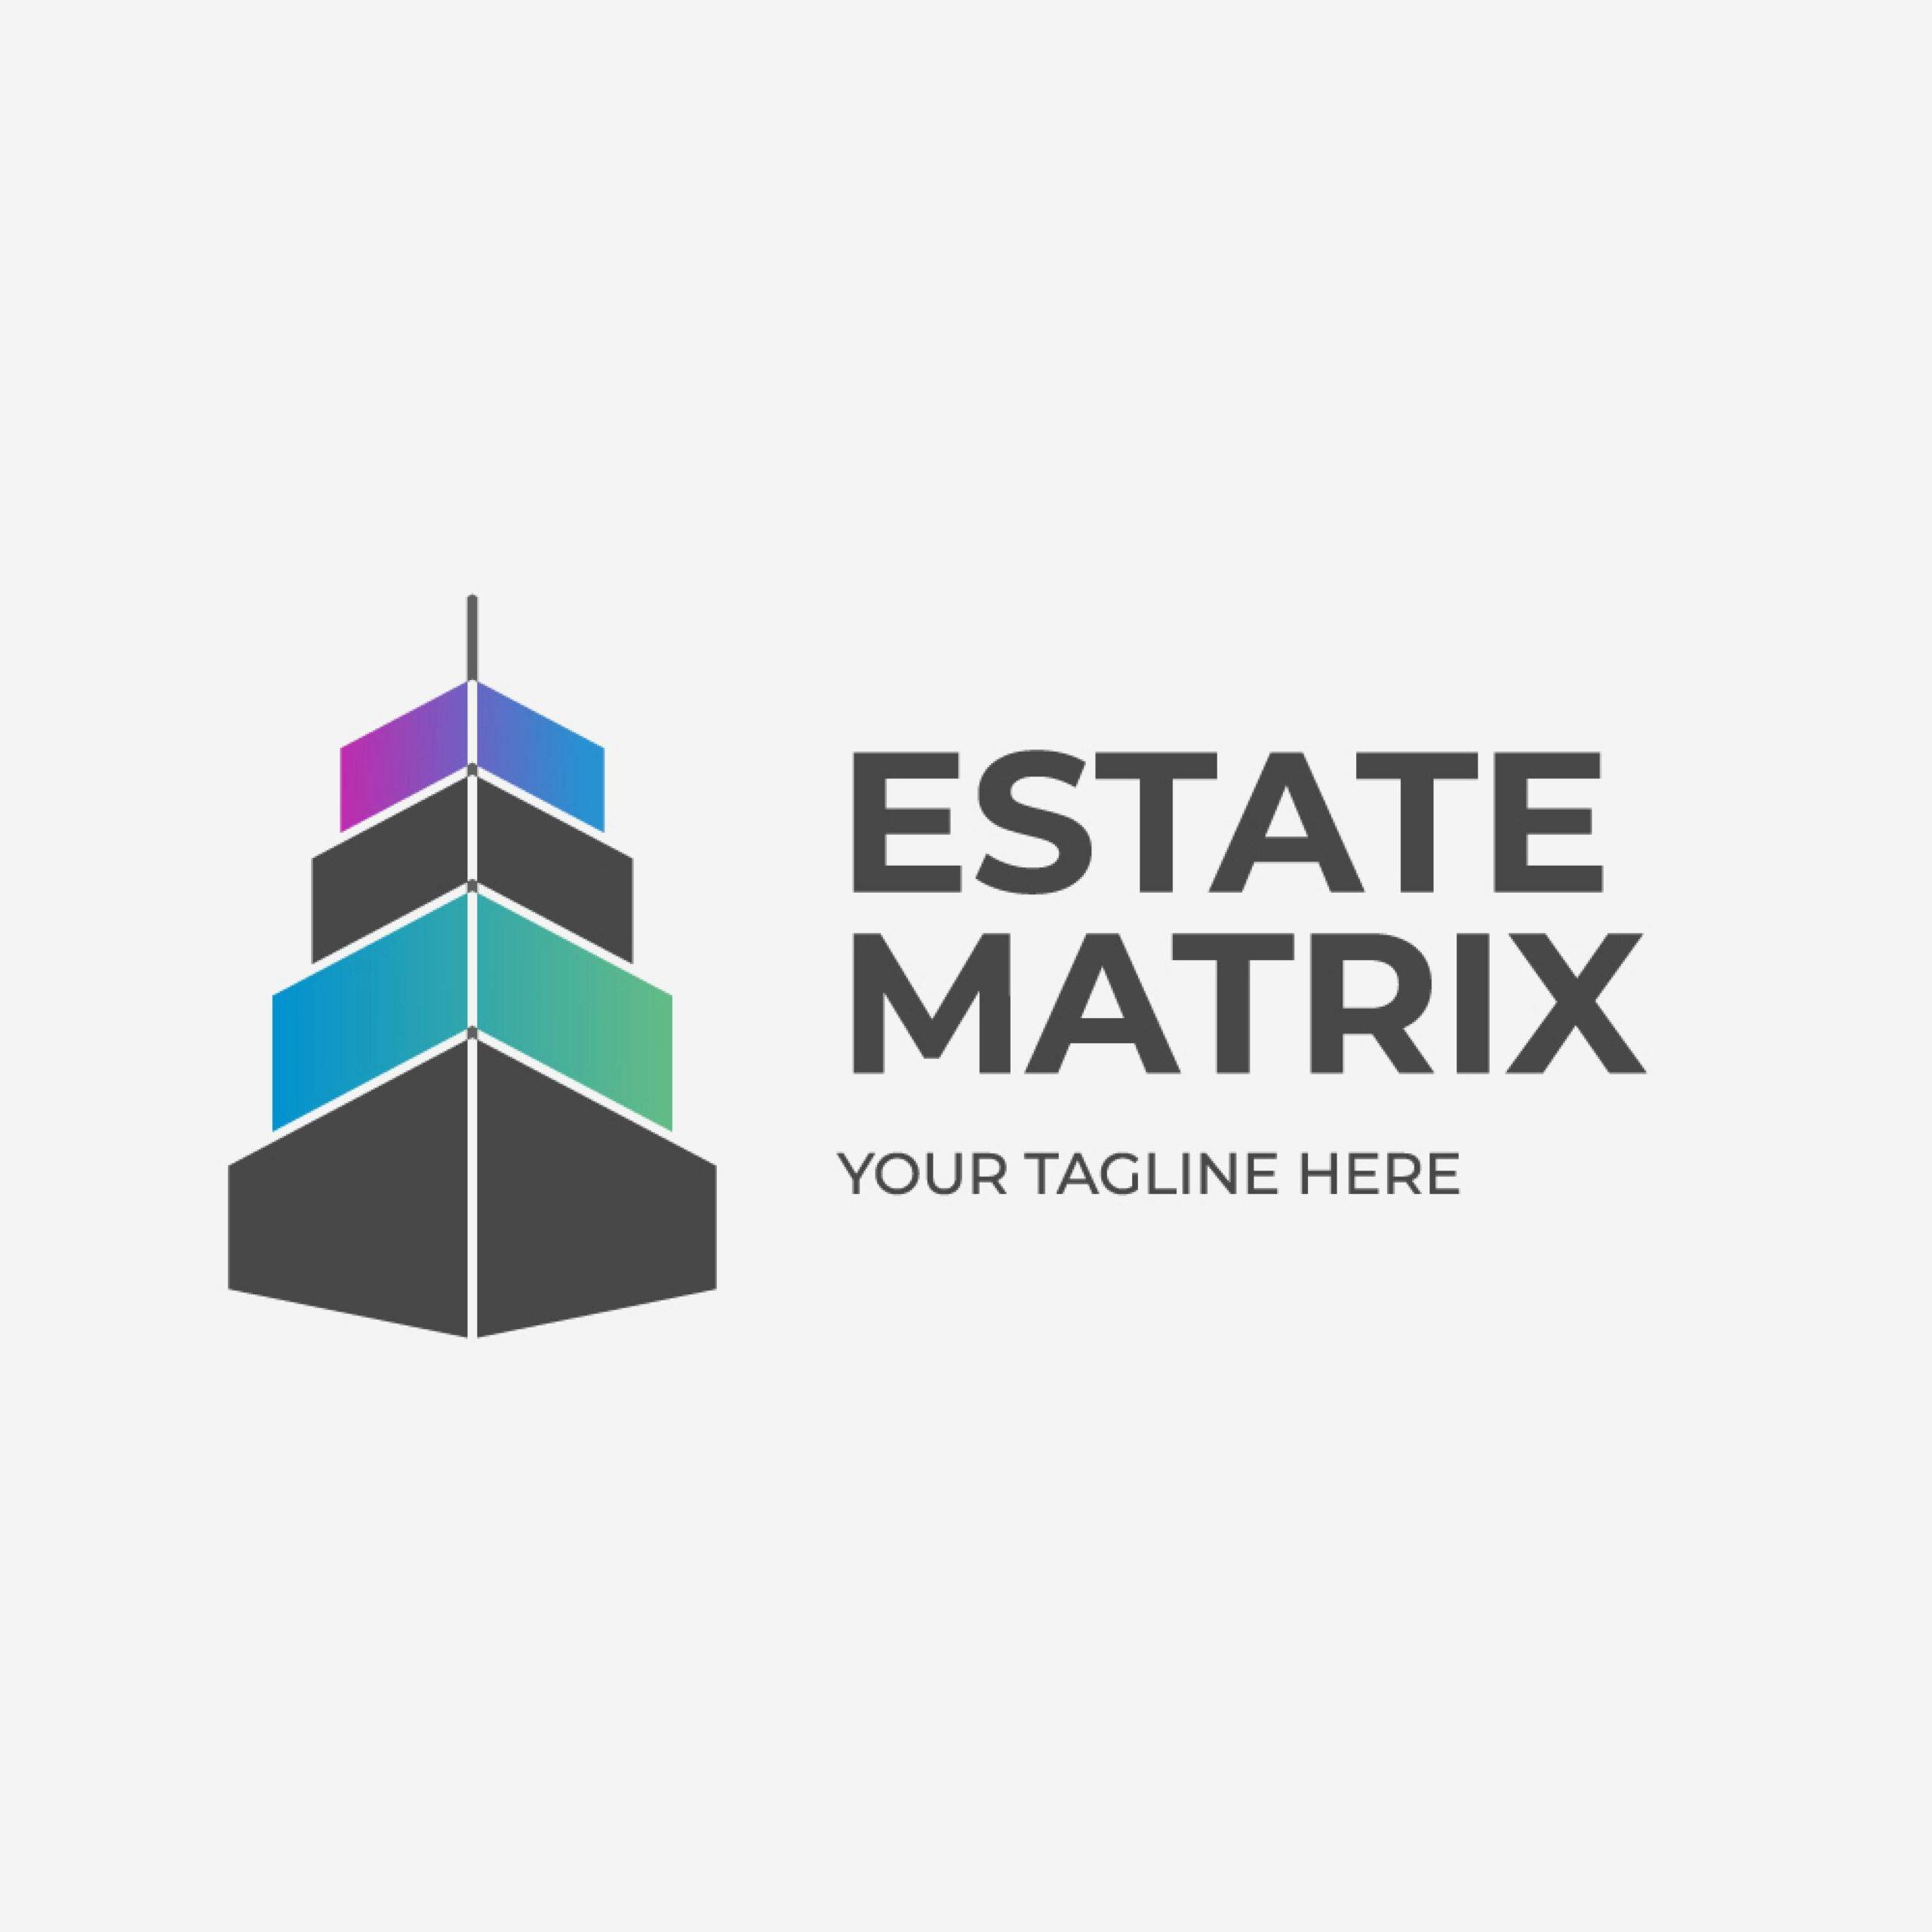 Real estate matrix building logo design